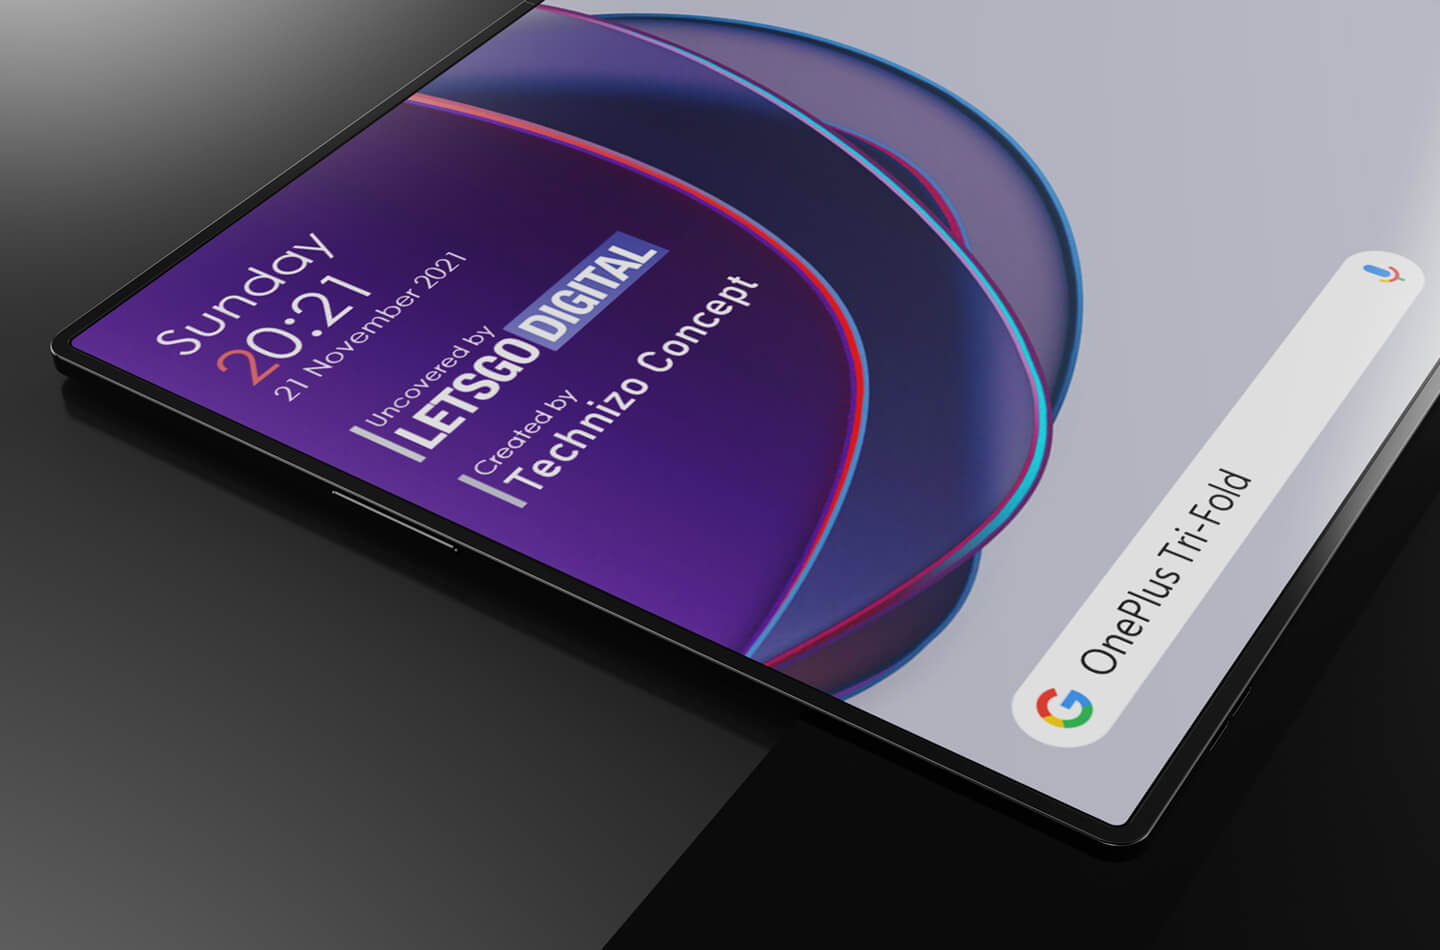 OnePlus smartphone